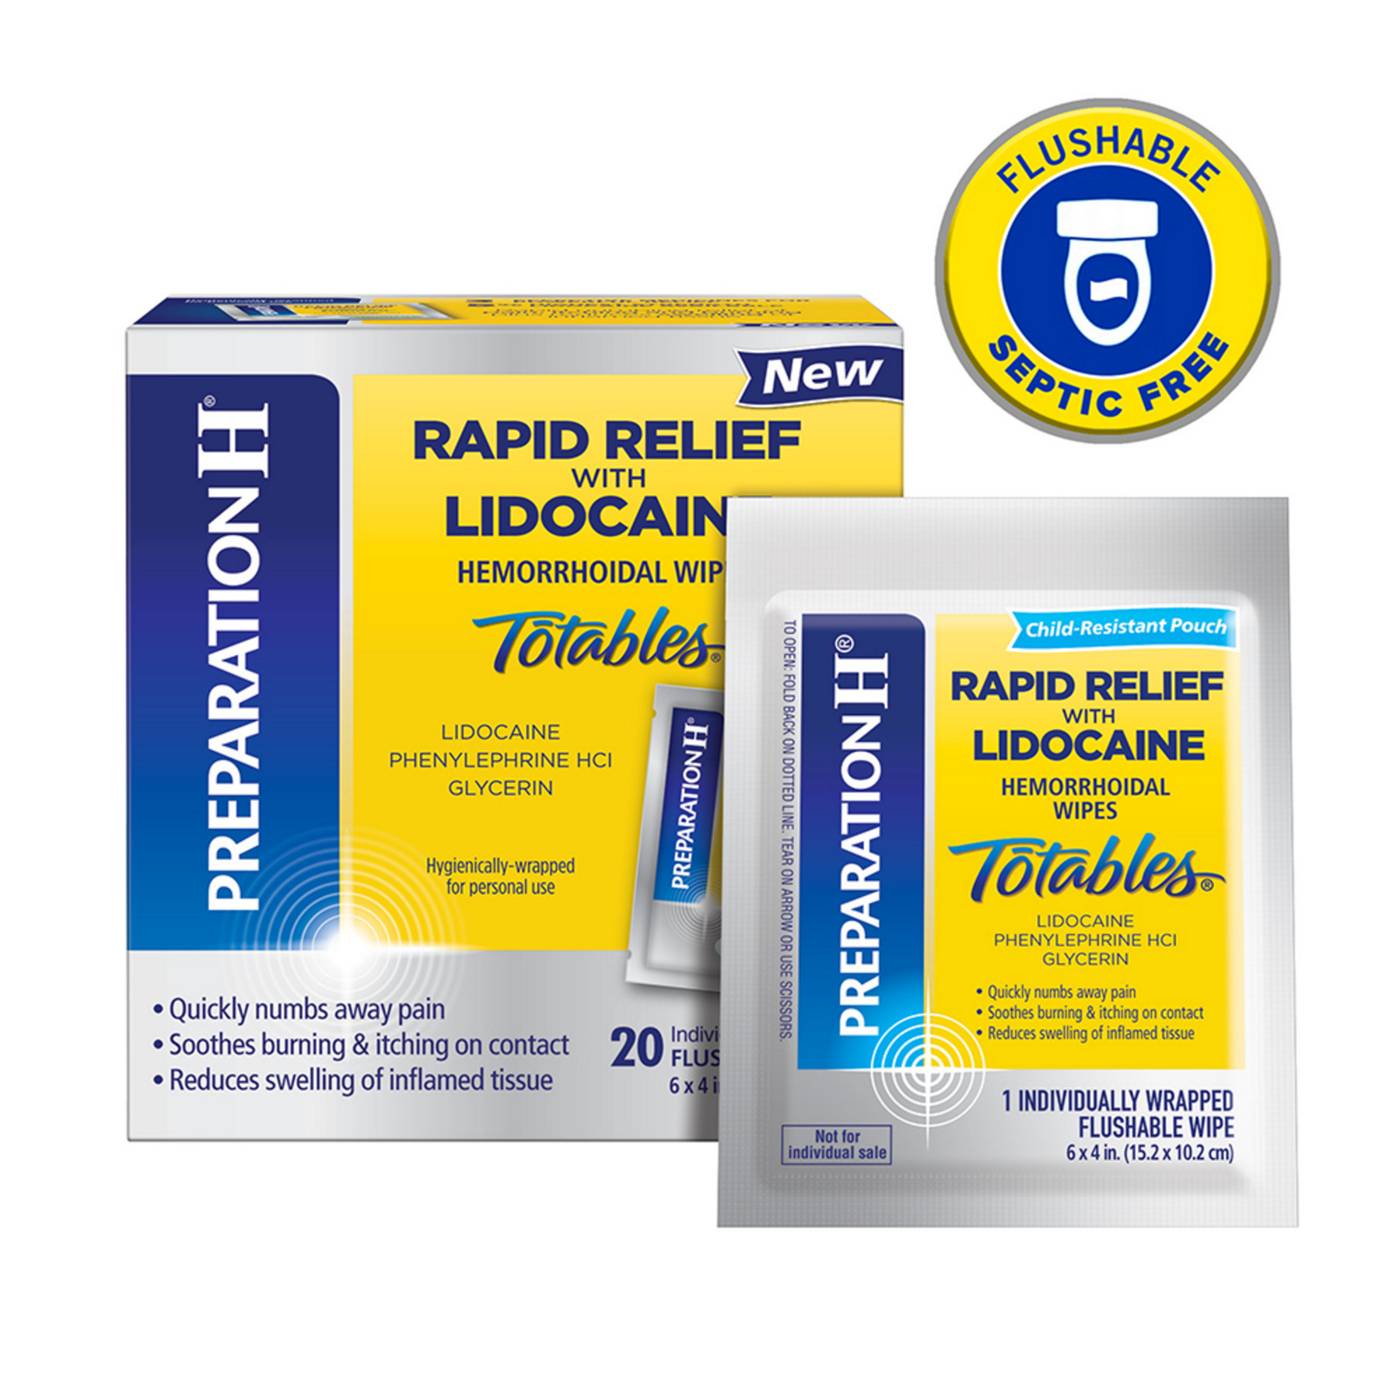 Preparation H Rapid Relief Lidocaine Hemorrhoidal Wipes - Totables; image 7 of 8